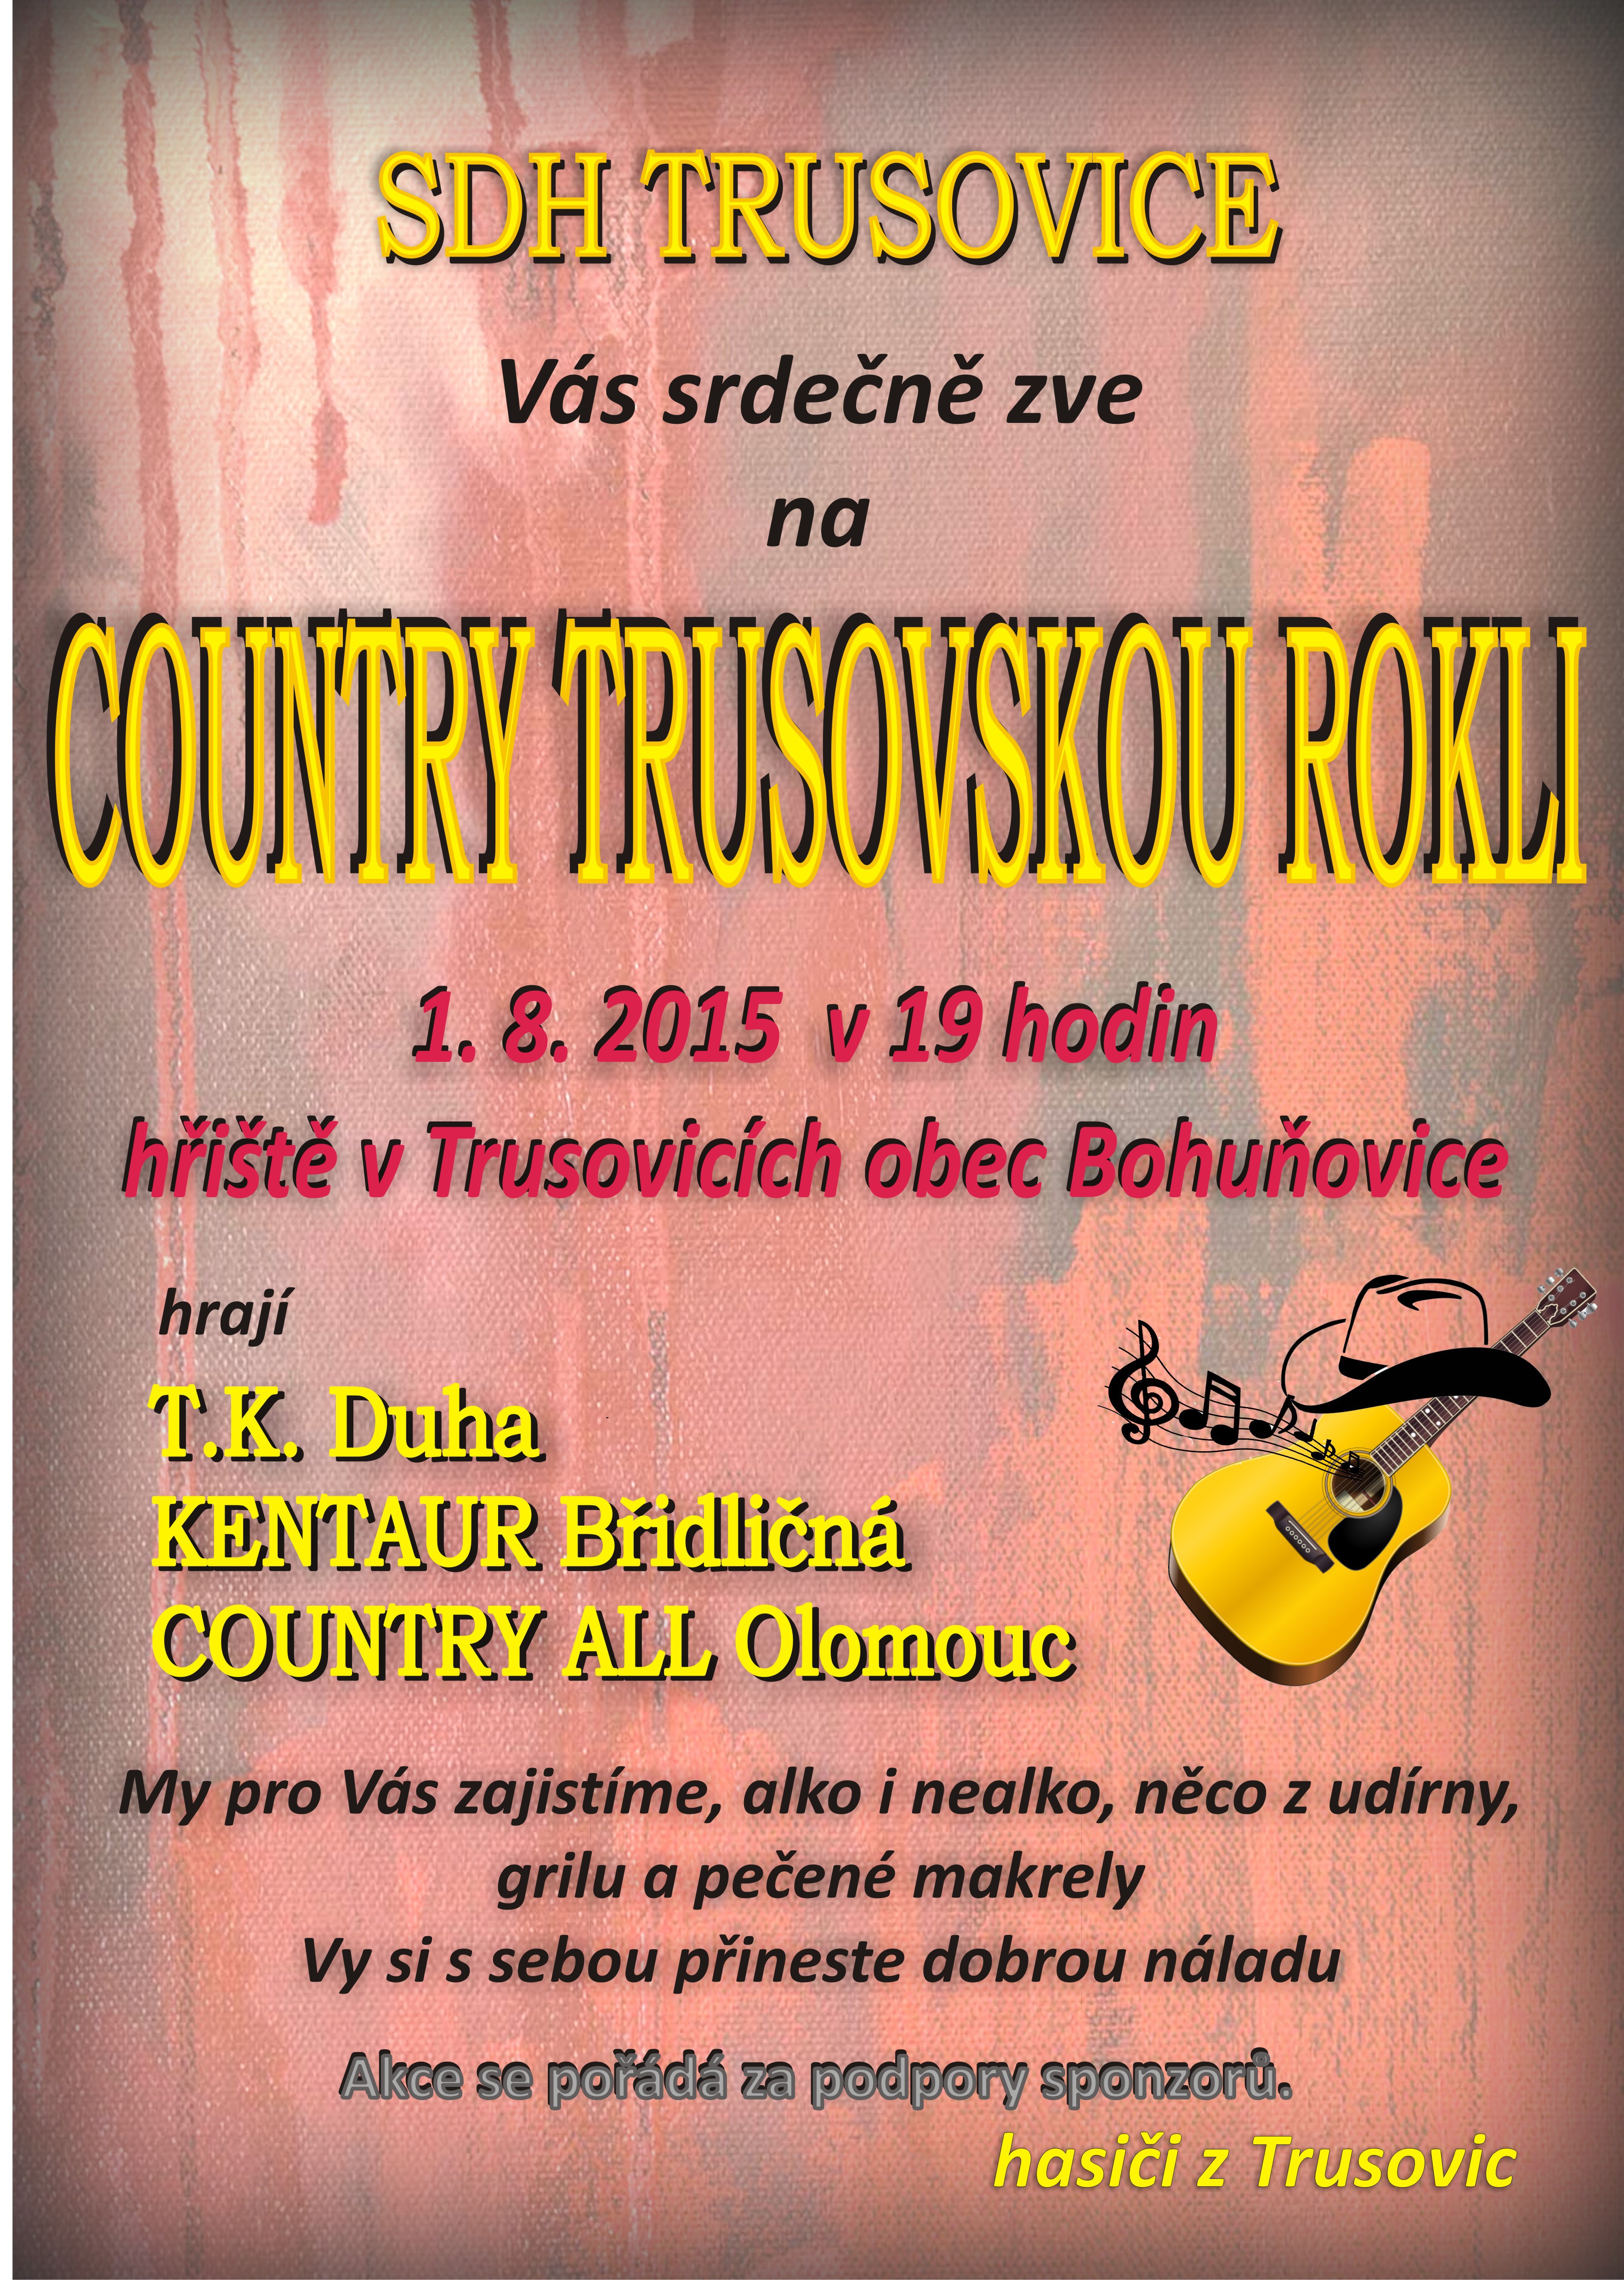 country_trusovska-rokle-2015.jpg